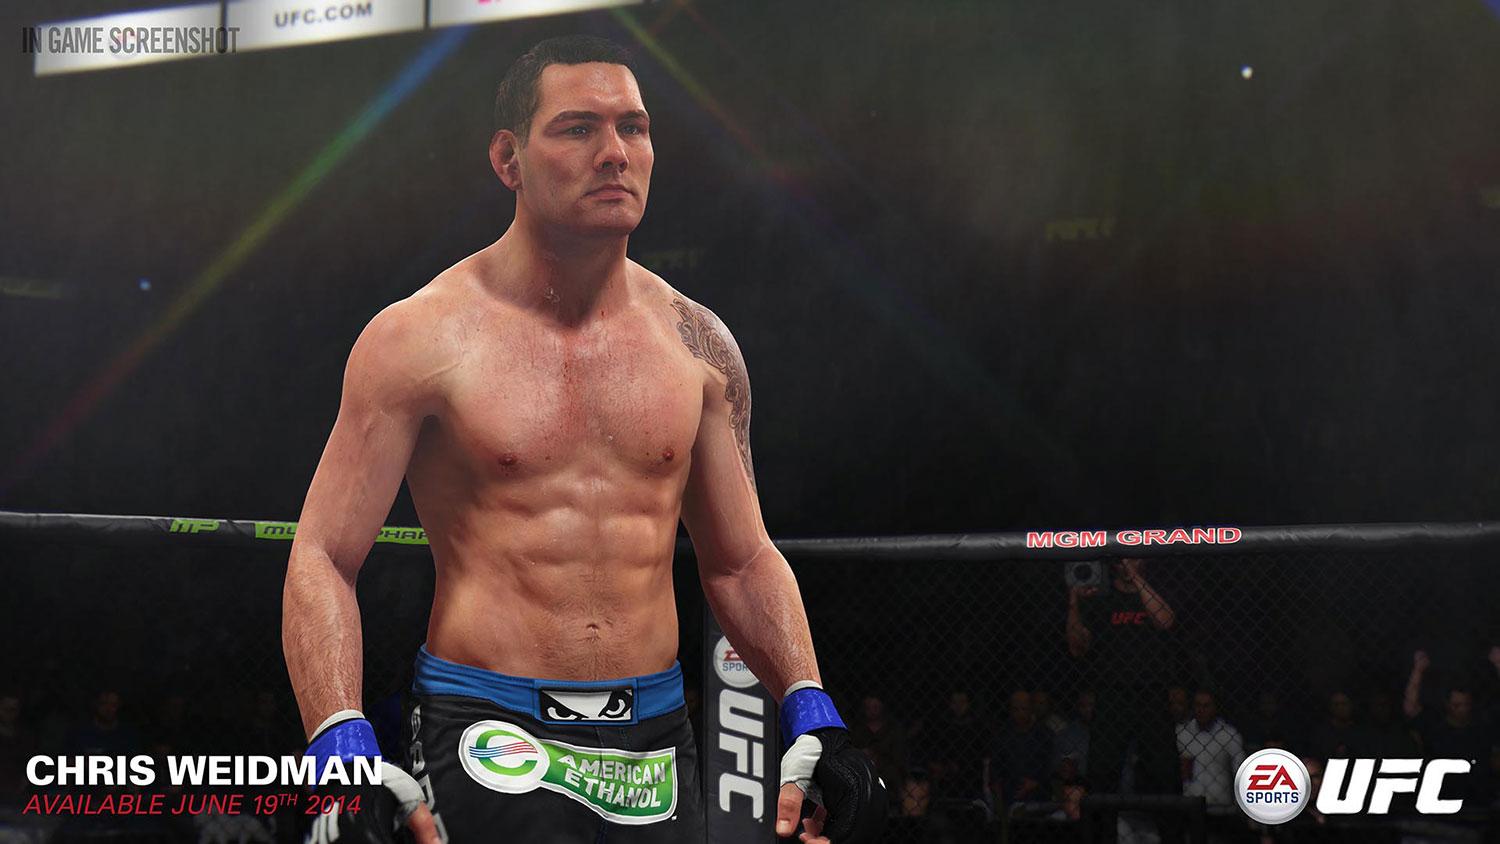 EA Sports UFC 5 (PS5) - Electronic Arts